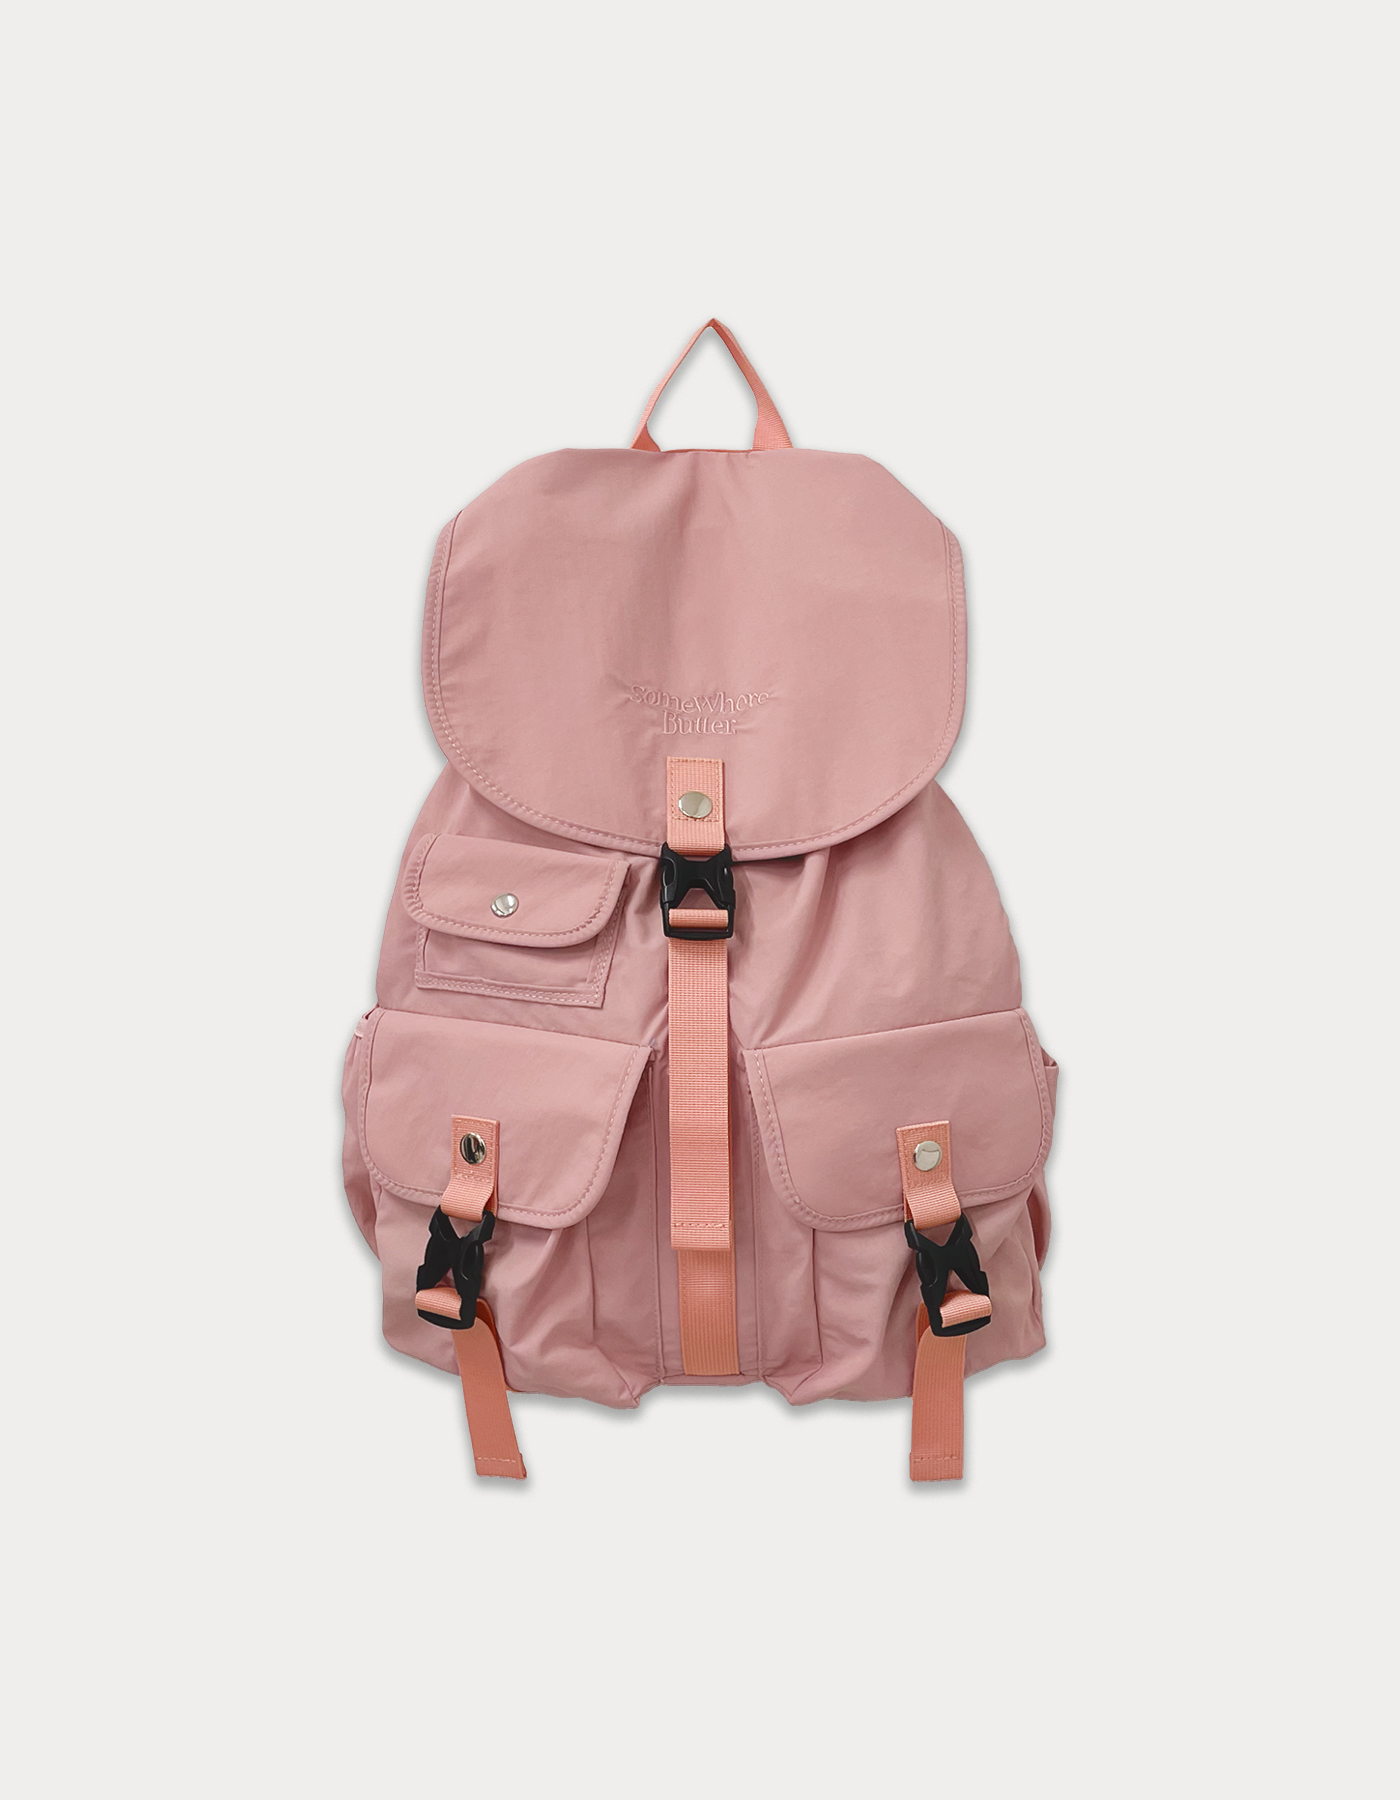 PP Backpack - pink